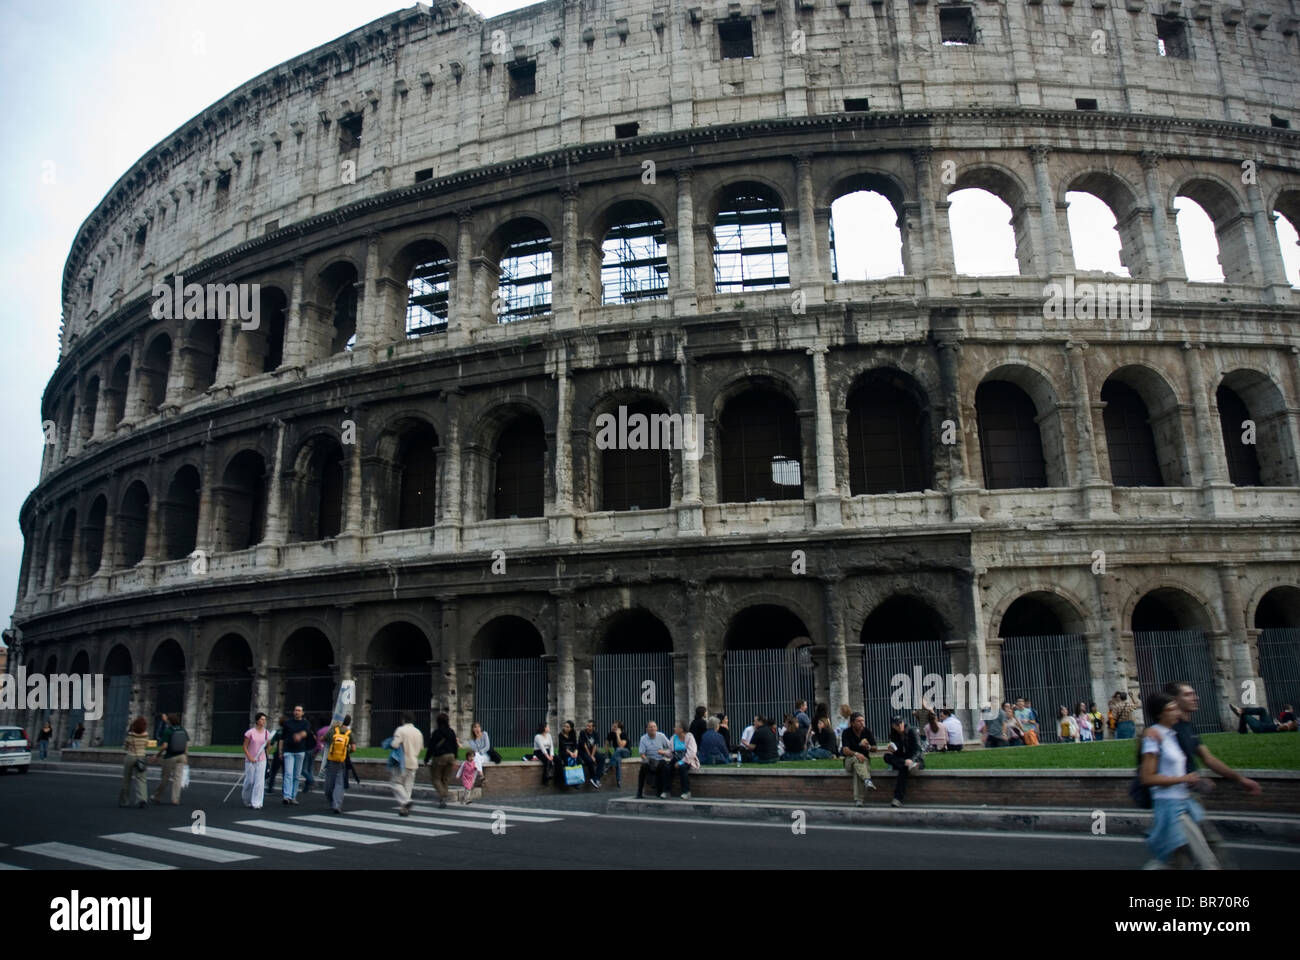 Roman Coliseum in Rome Italy. Stock Photo